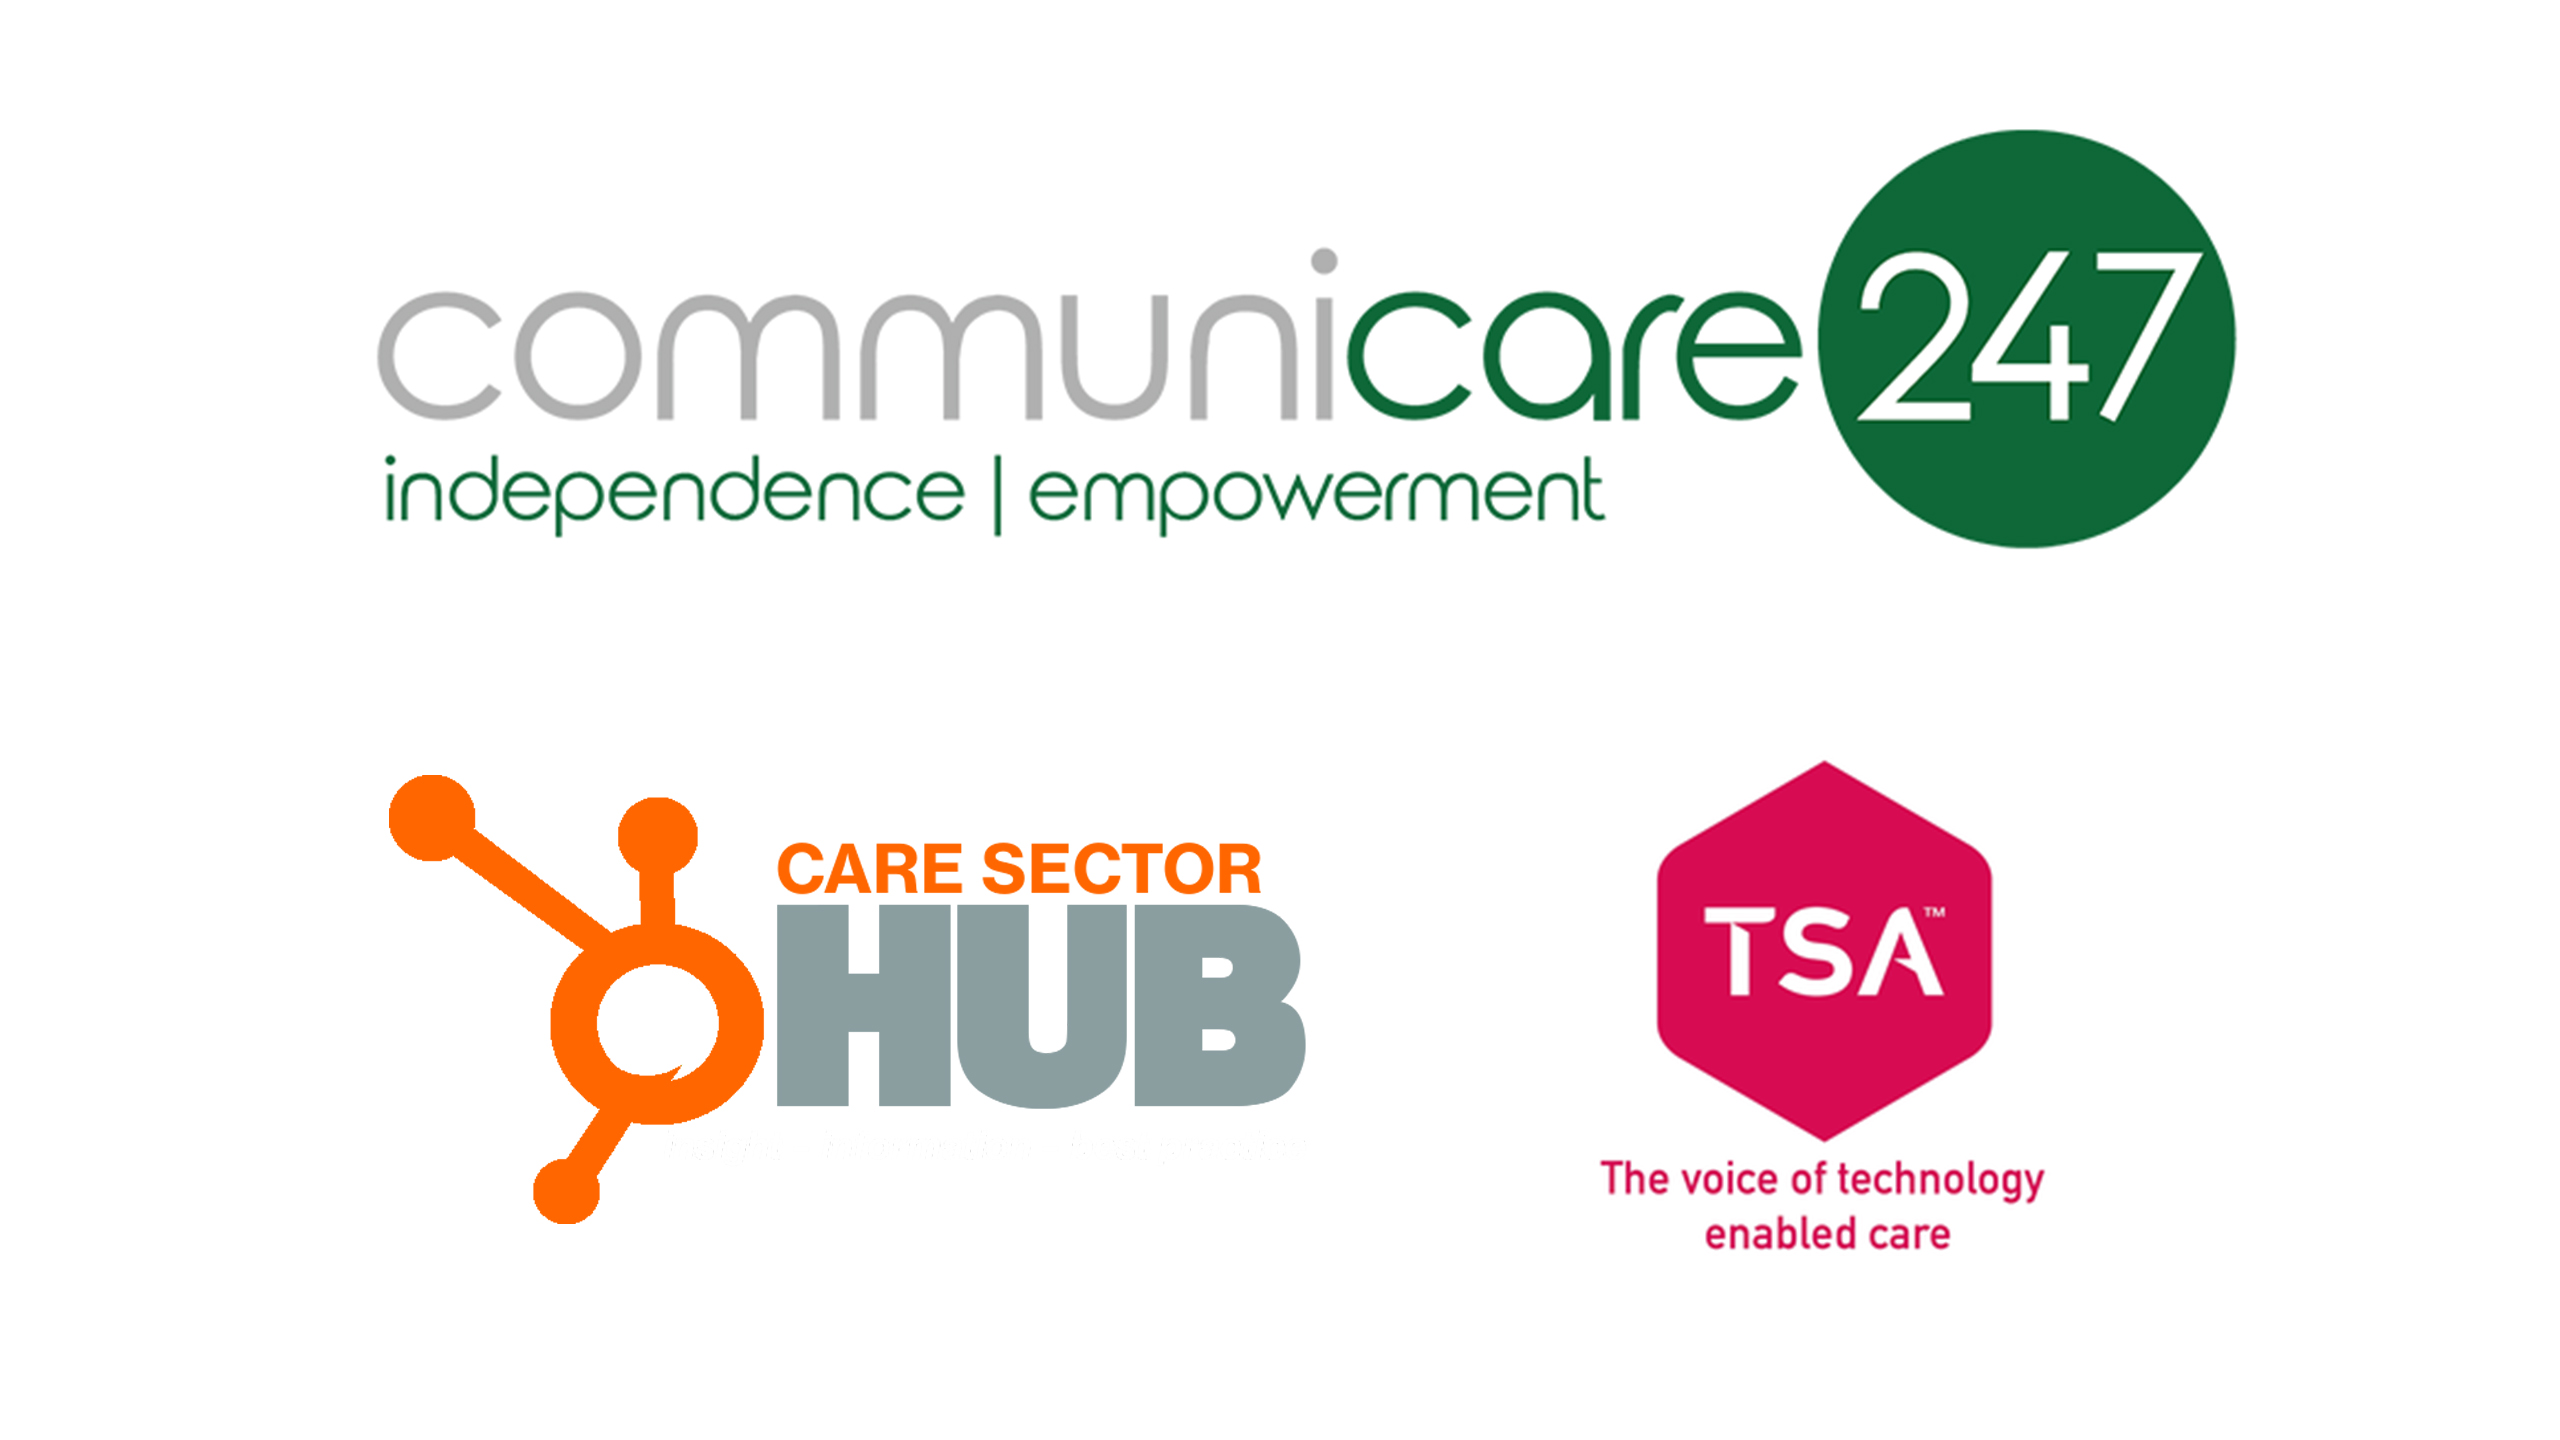 Communicare247, Care Sector Hub and TSA's logos